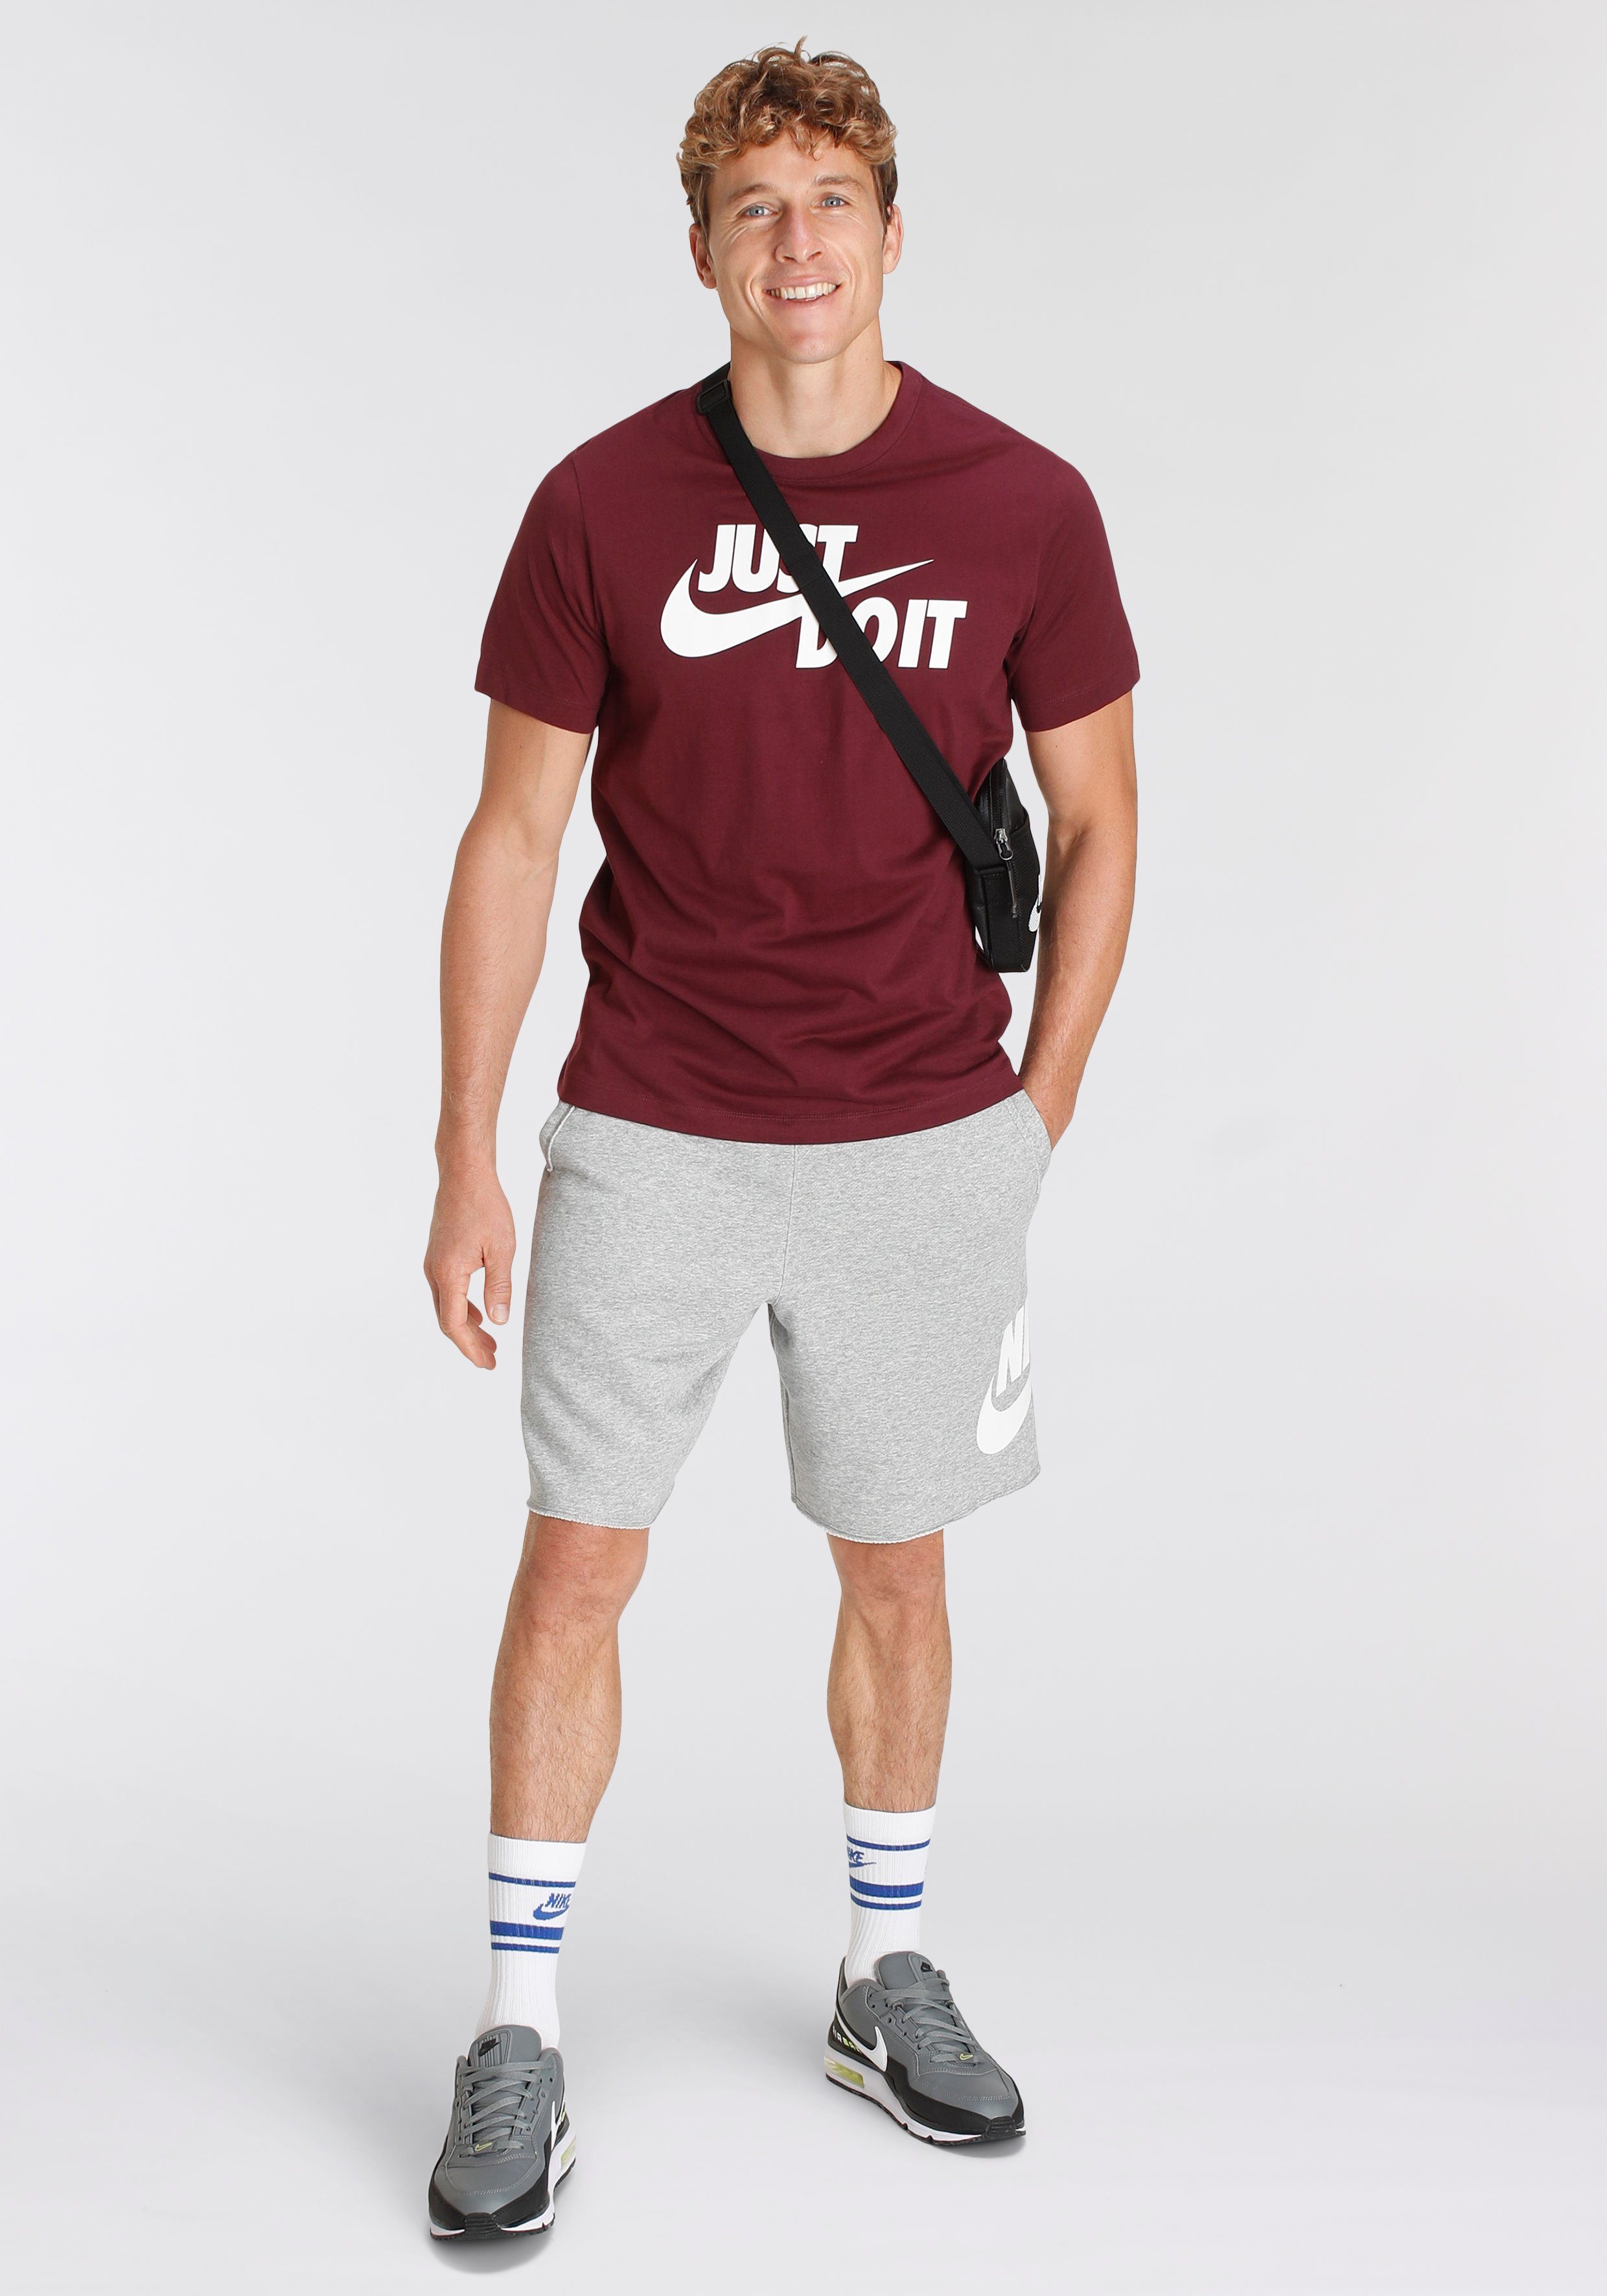 MAROON JDI T-Shirt T-SHIRT MEN'S NIGHT Sportswear Nike